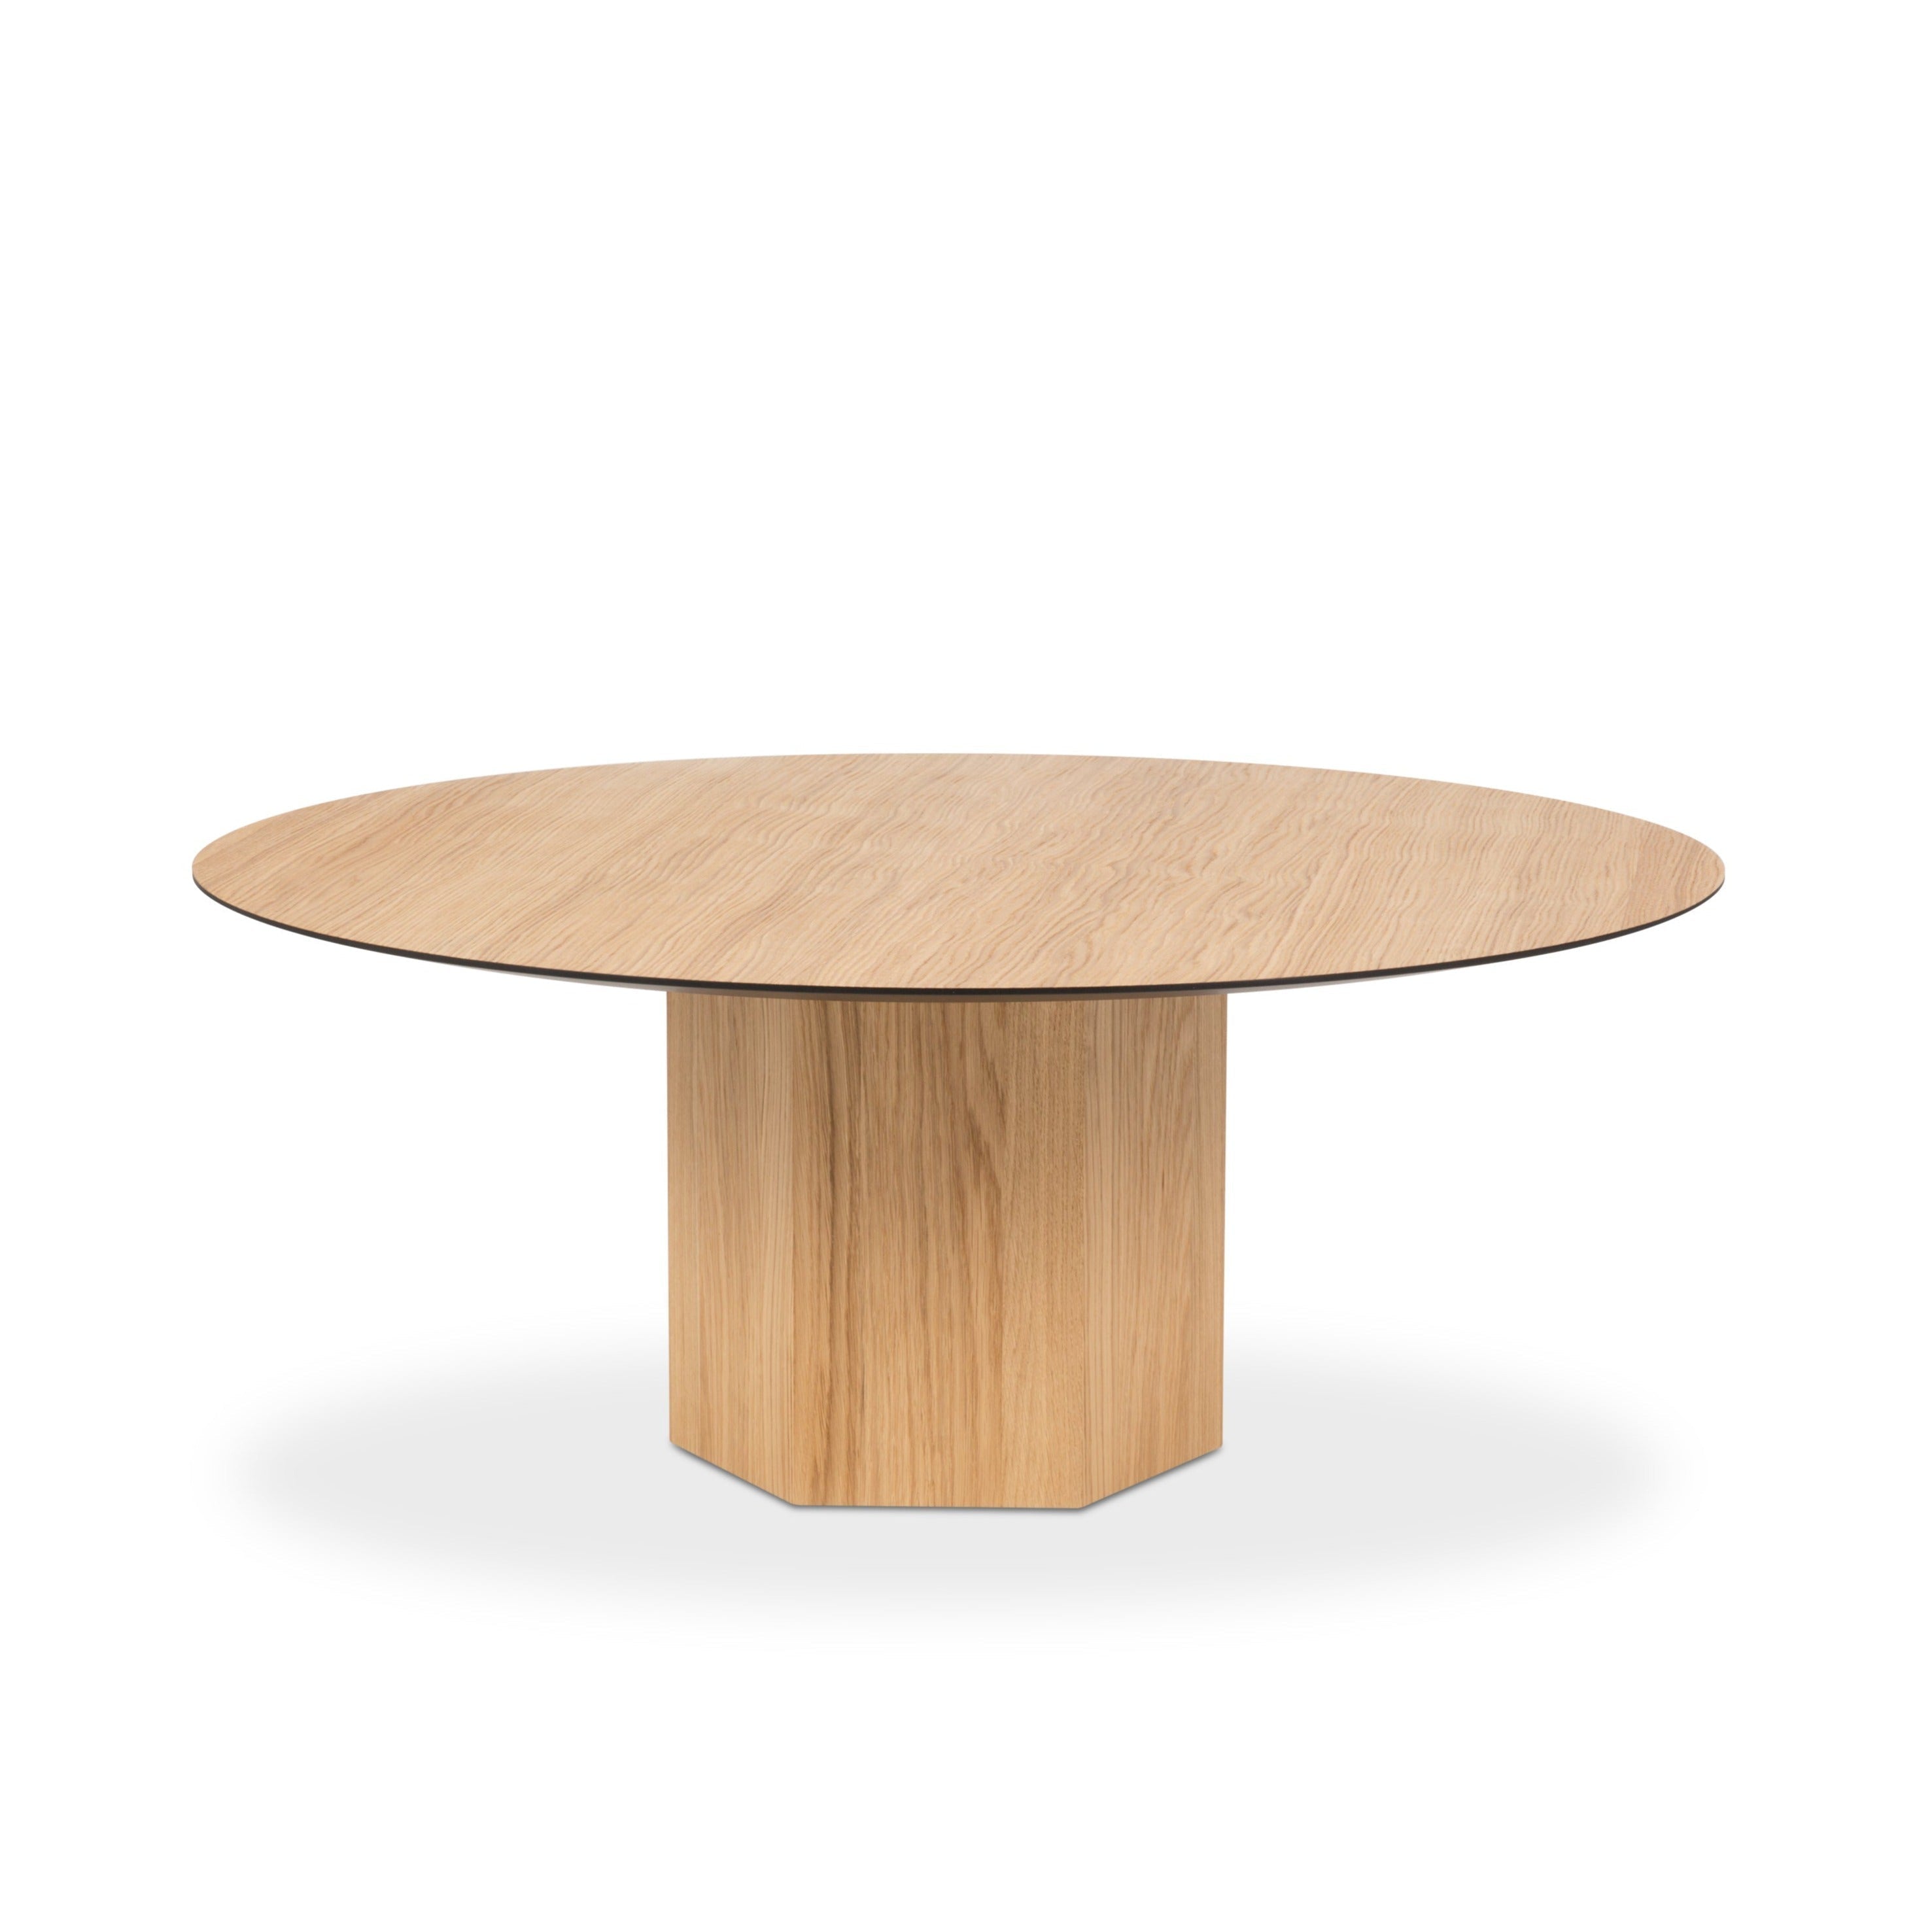 SAHARA wooden table